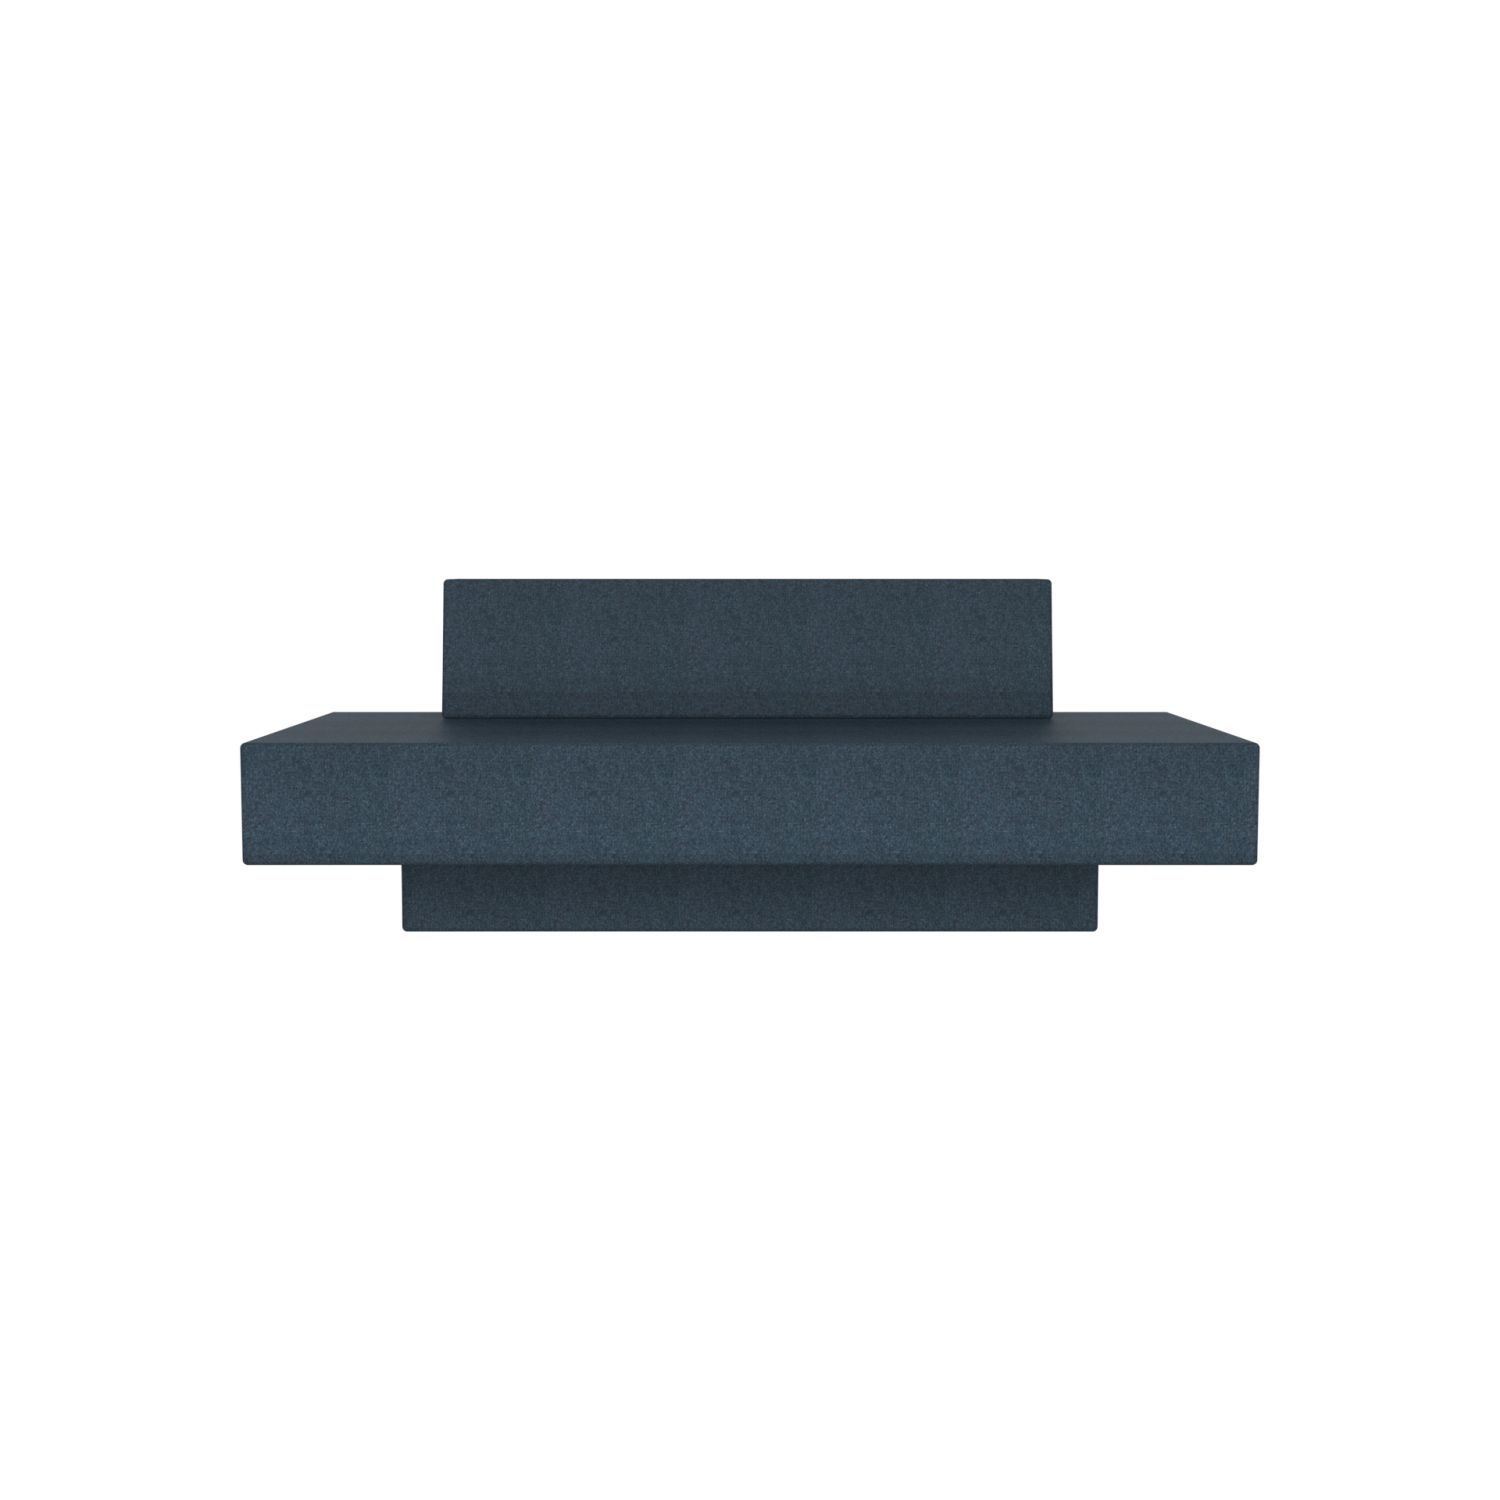 lensvelt atelier van lieshout glyder sofa with sliding backrest 85 x 190 cm moss night blue 45 price level 2